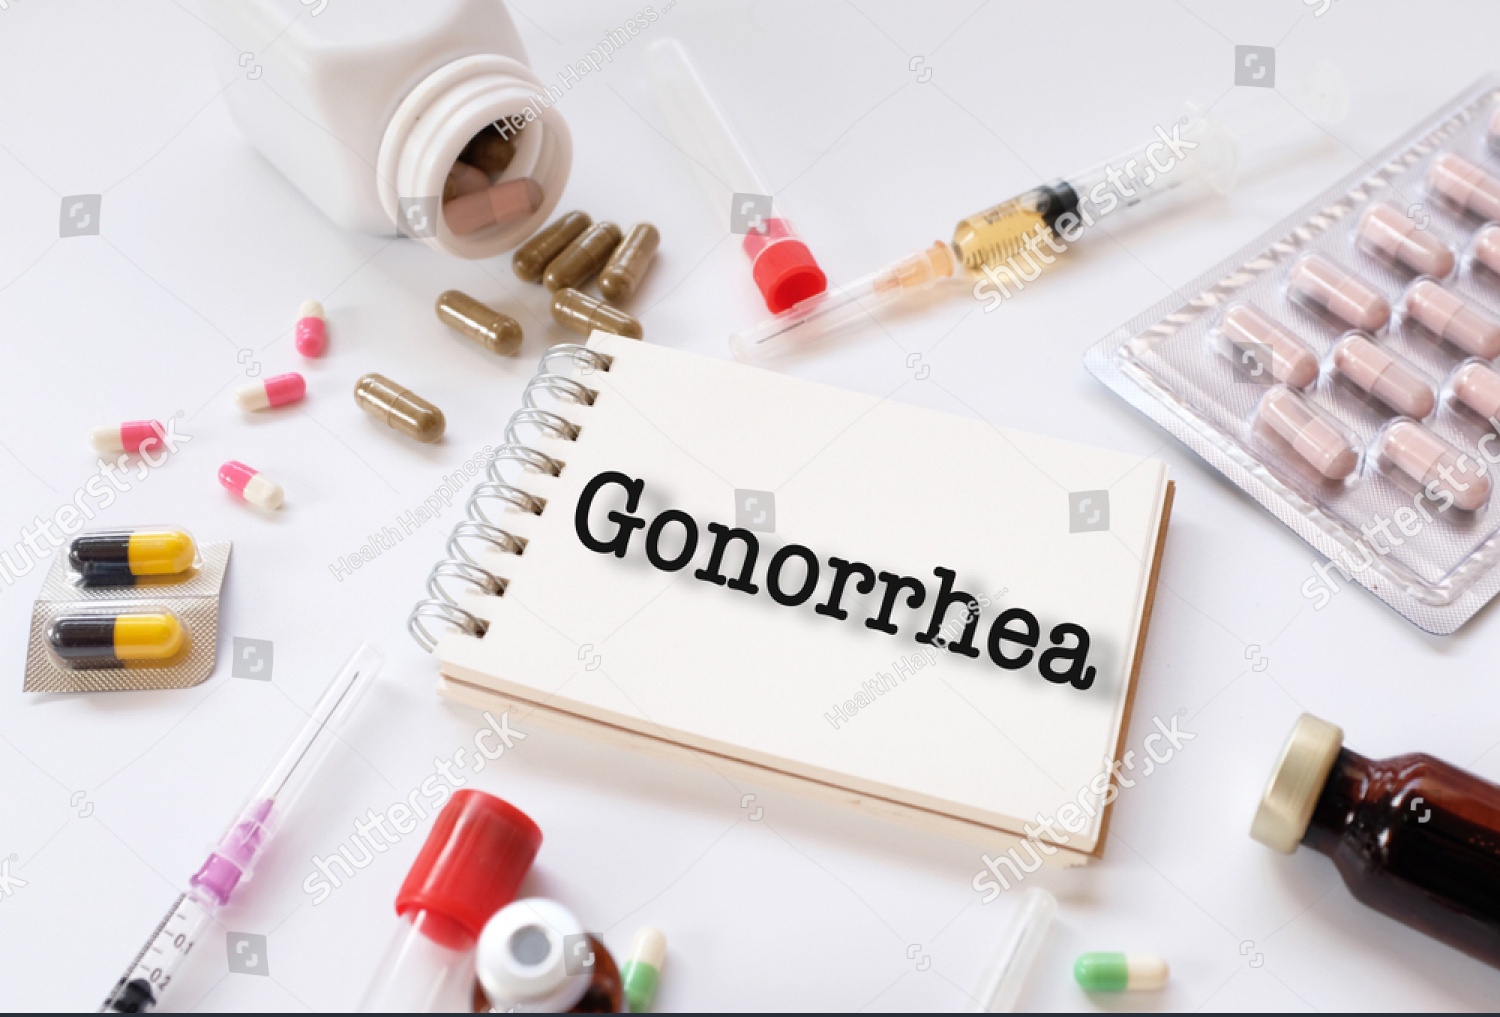 std gonorrhea symptoms female